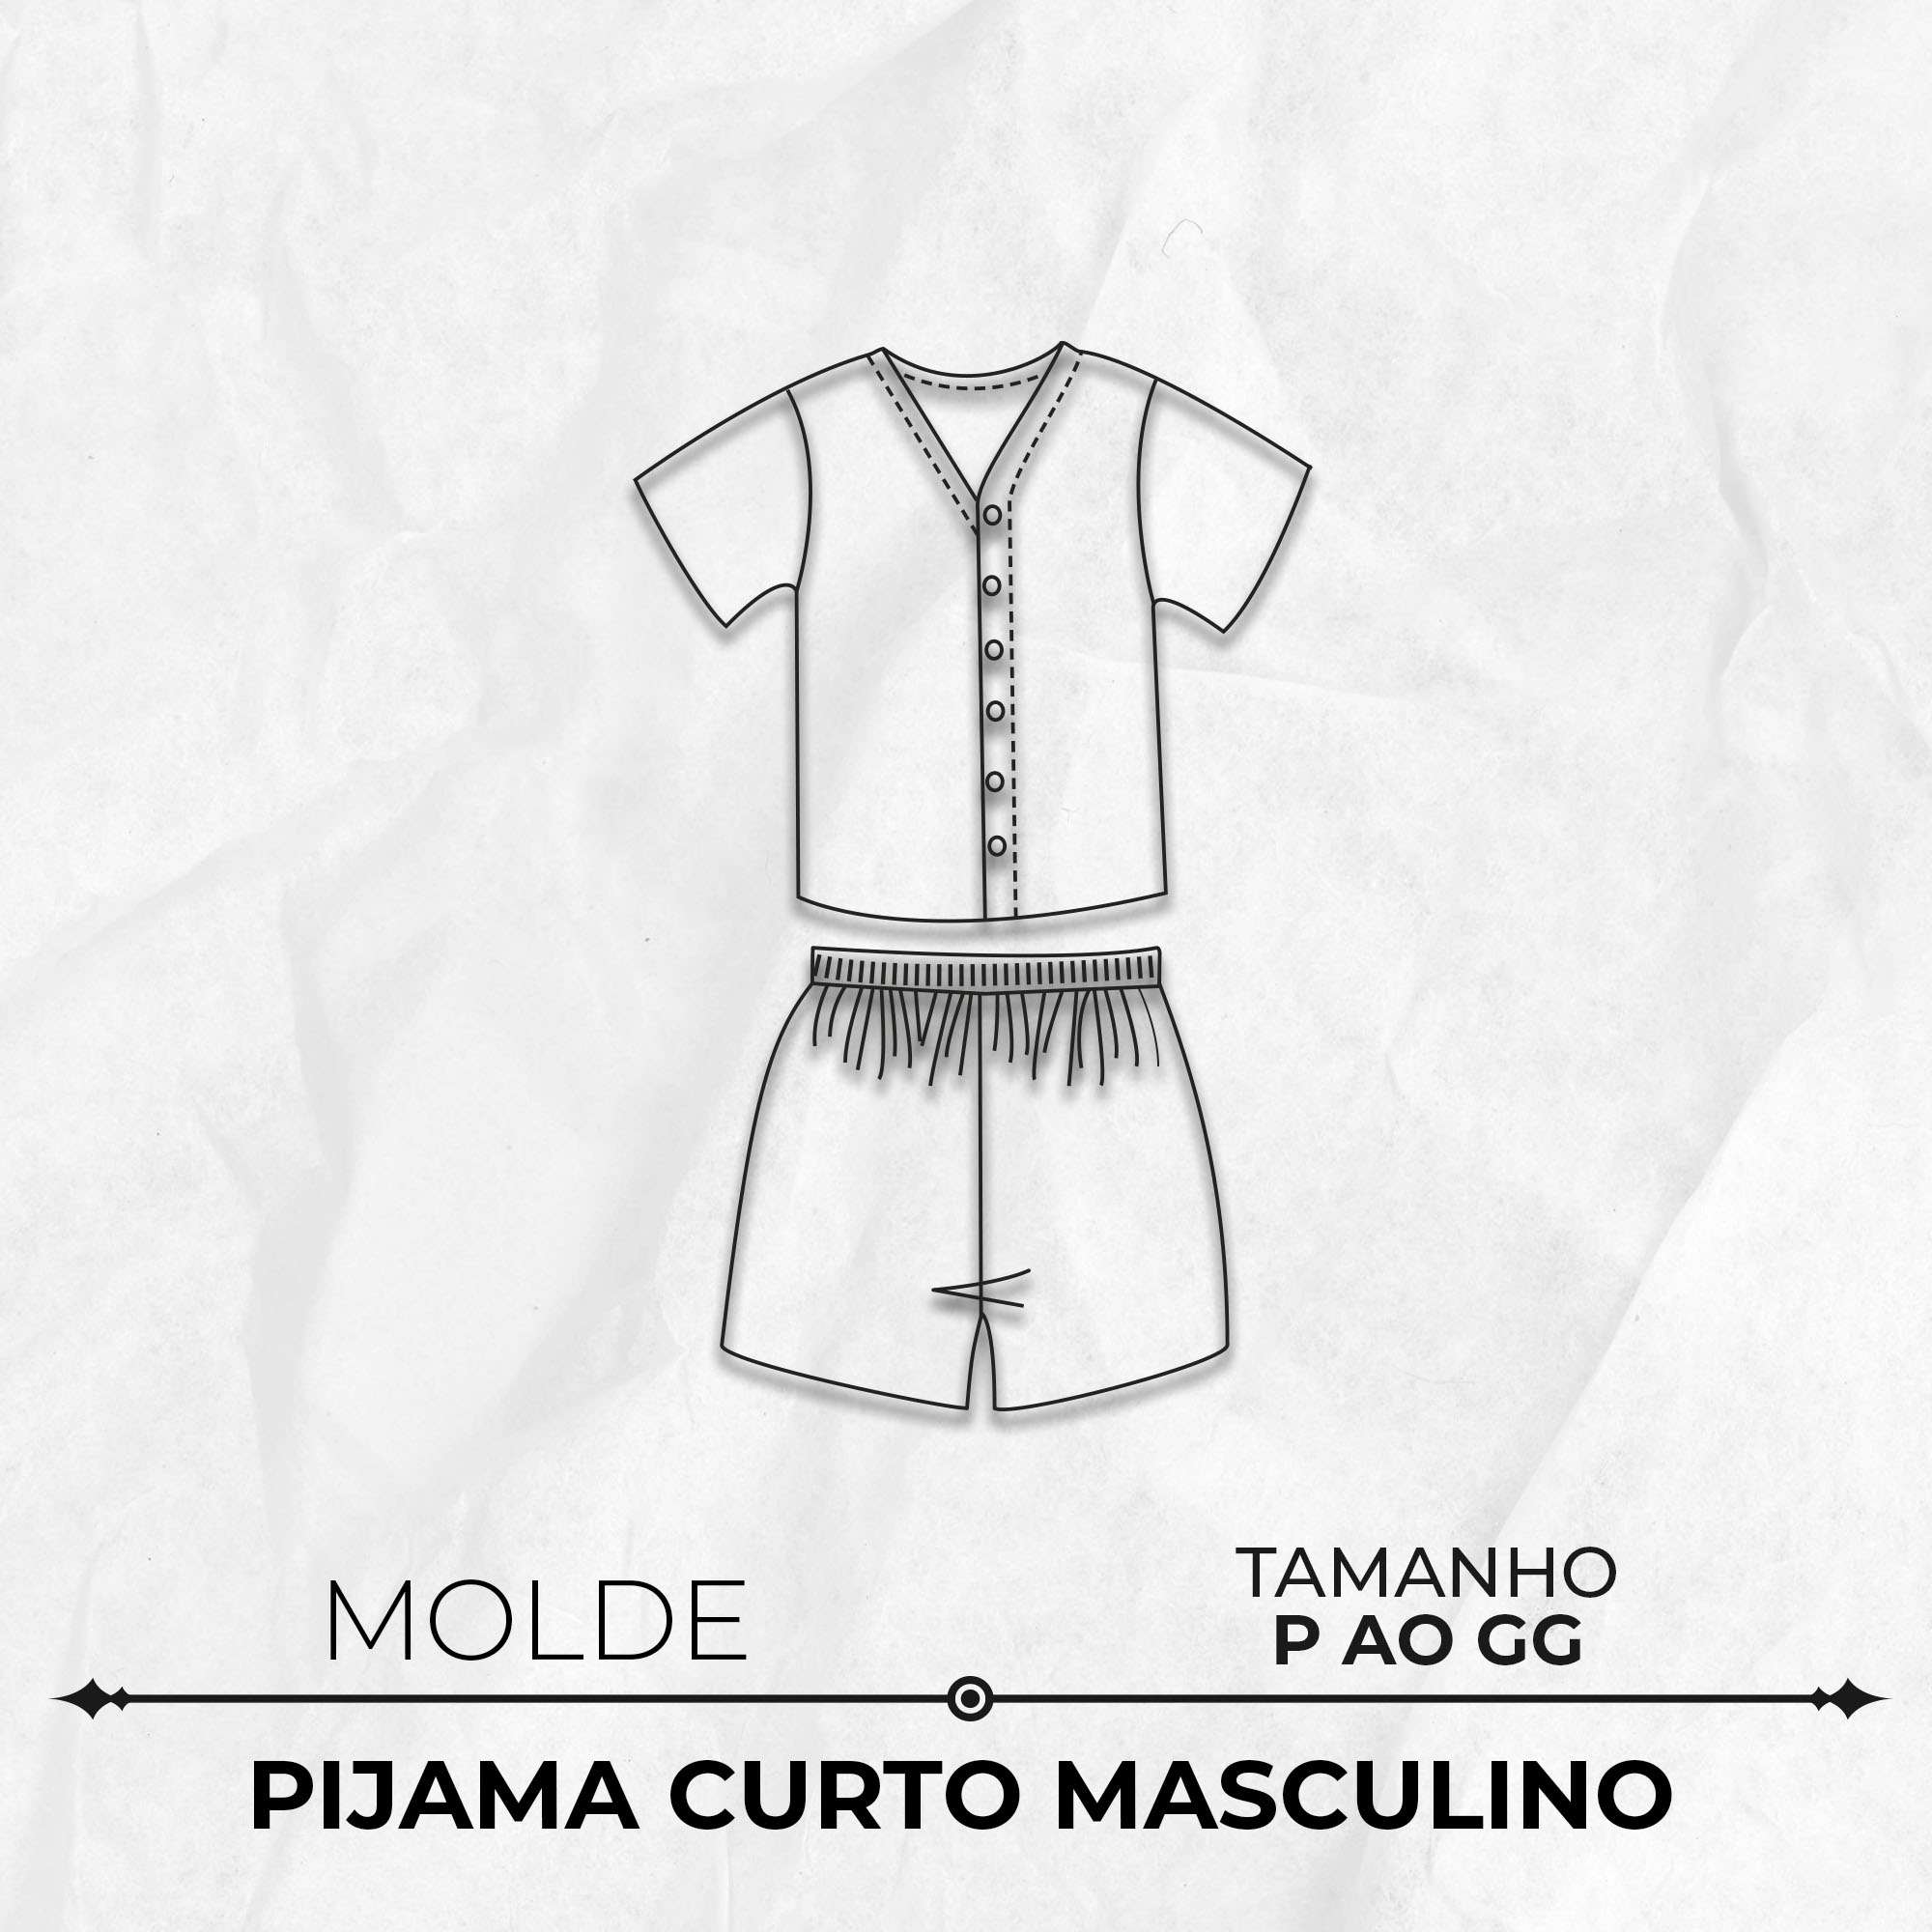 Molde pijama curto masculino tamanho P ao GG by Marlene Mukai